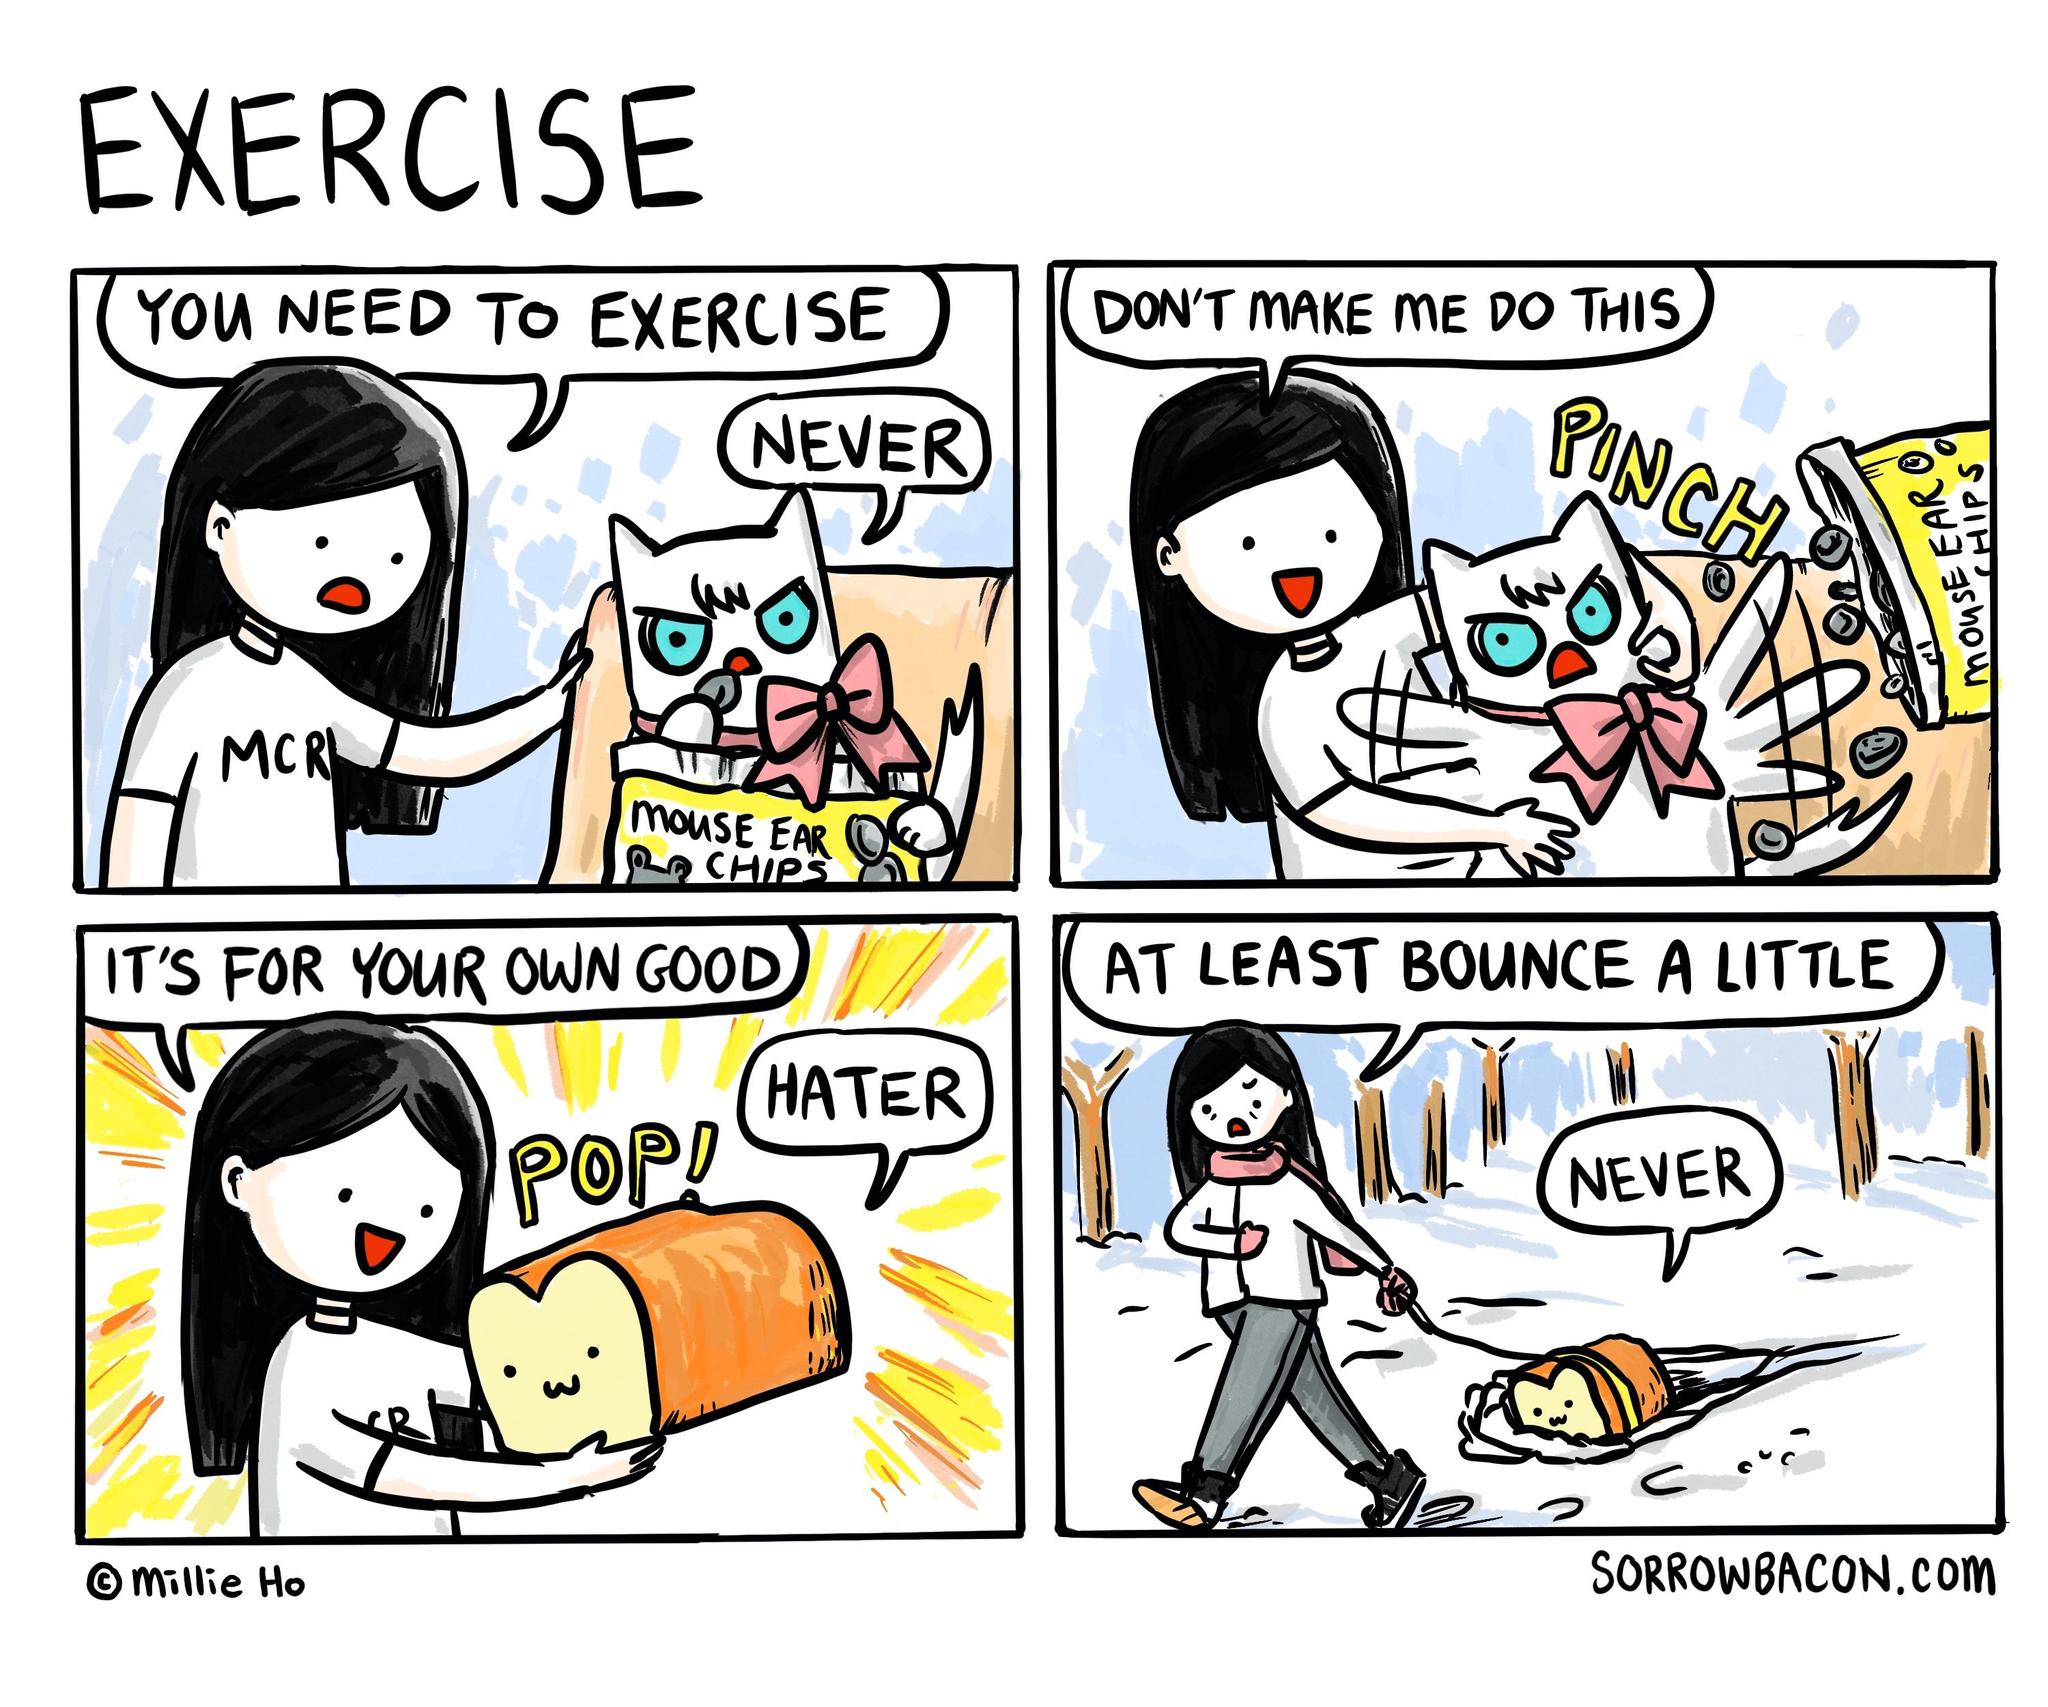 Exercise sorrowbacon comic